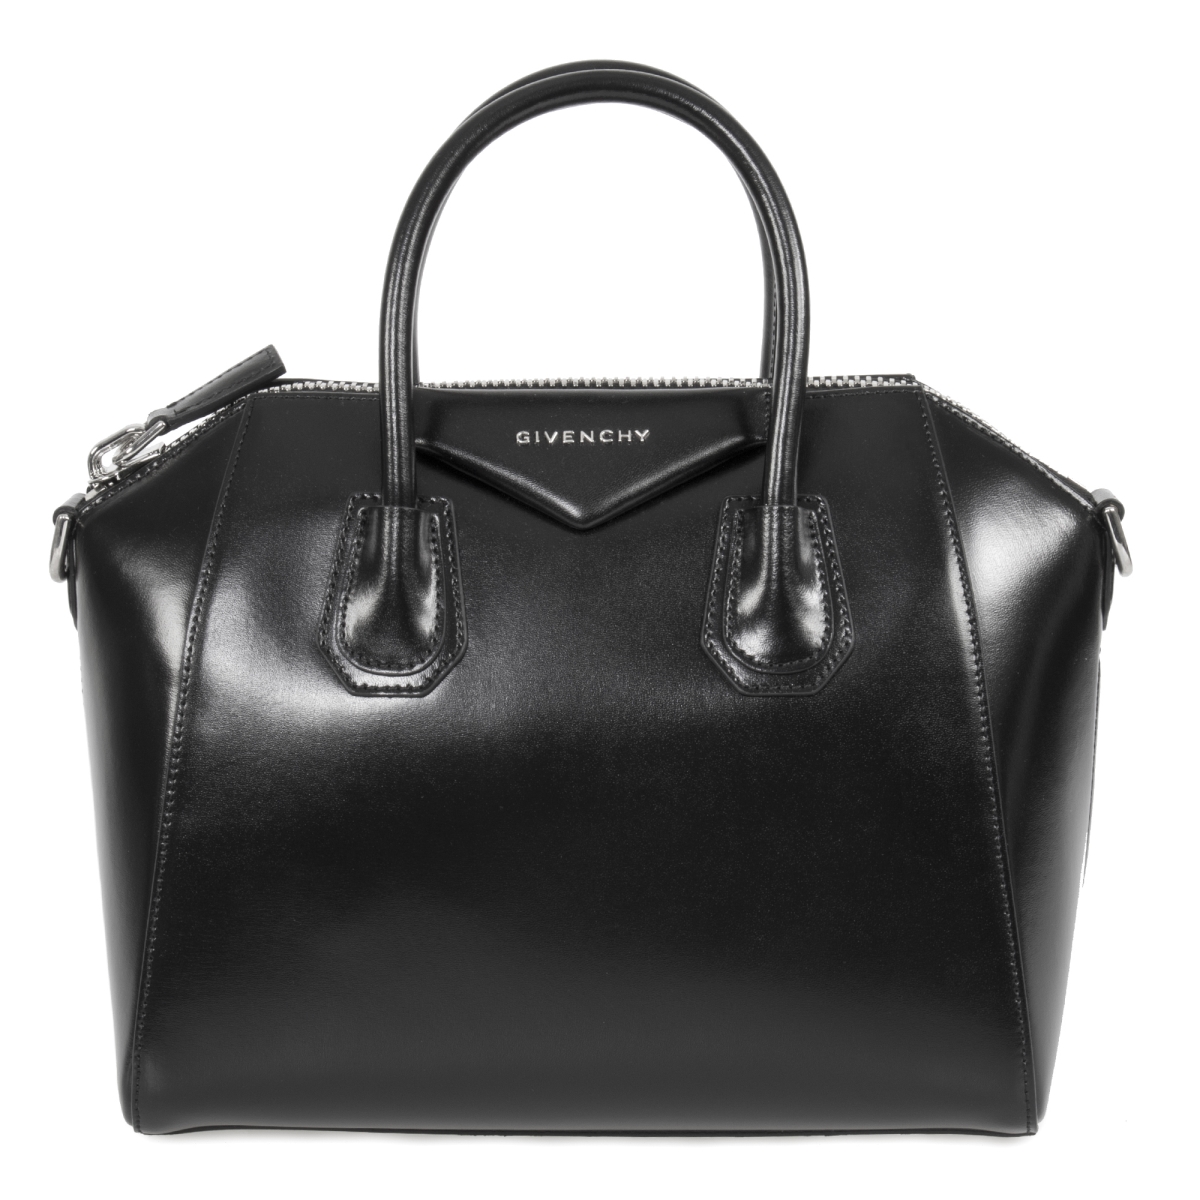 Gvy-hbag-anti-blk-svr-det-s Small Antigona Calfskin Leather Satchel Bag, Black With Silver Hardware